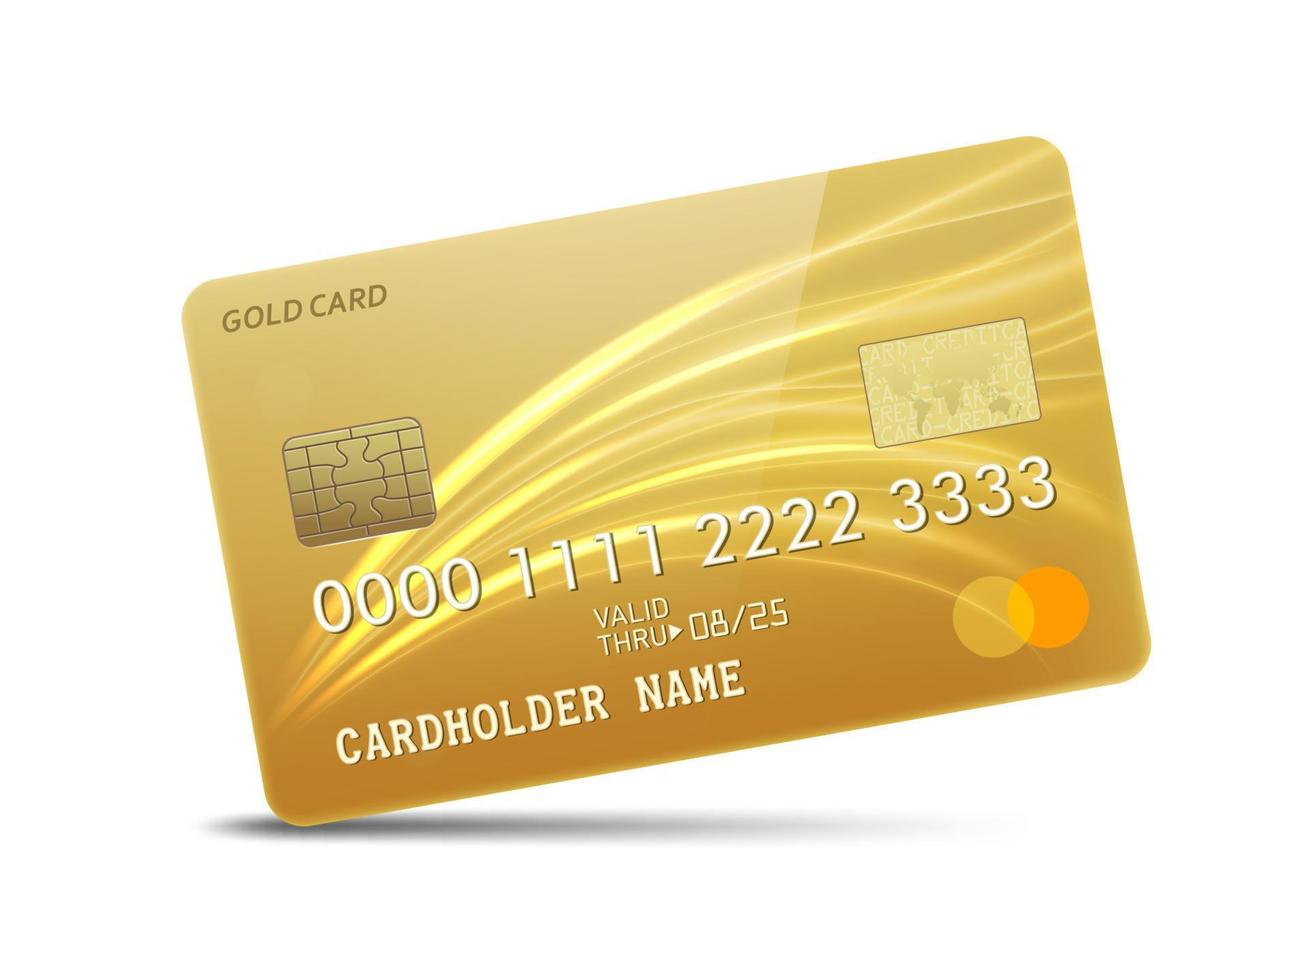 tarjeta de crédito de oro brillante detallada con decoración de luz de neón ondulada, aislada sobre fondo blanco. ilustración vectorial vector